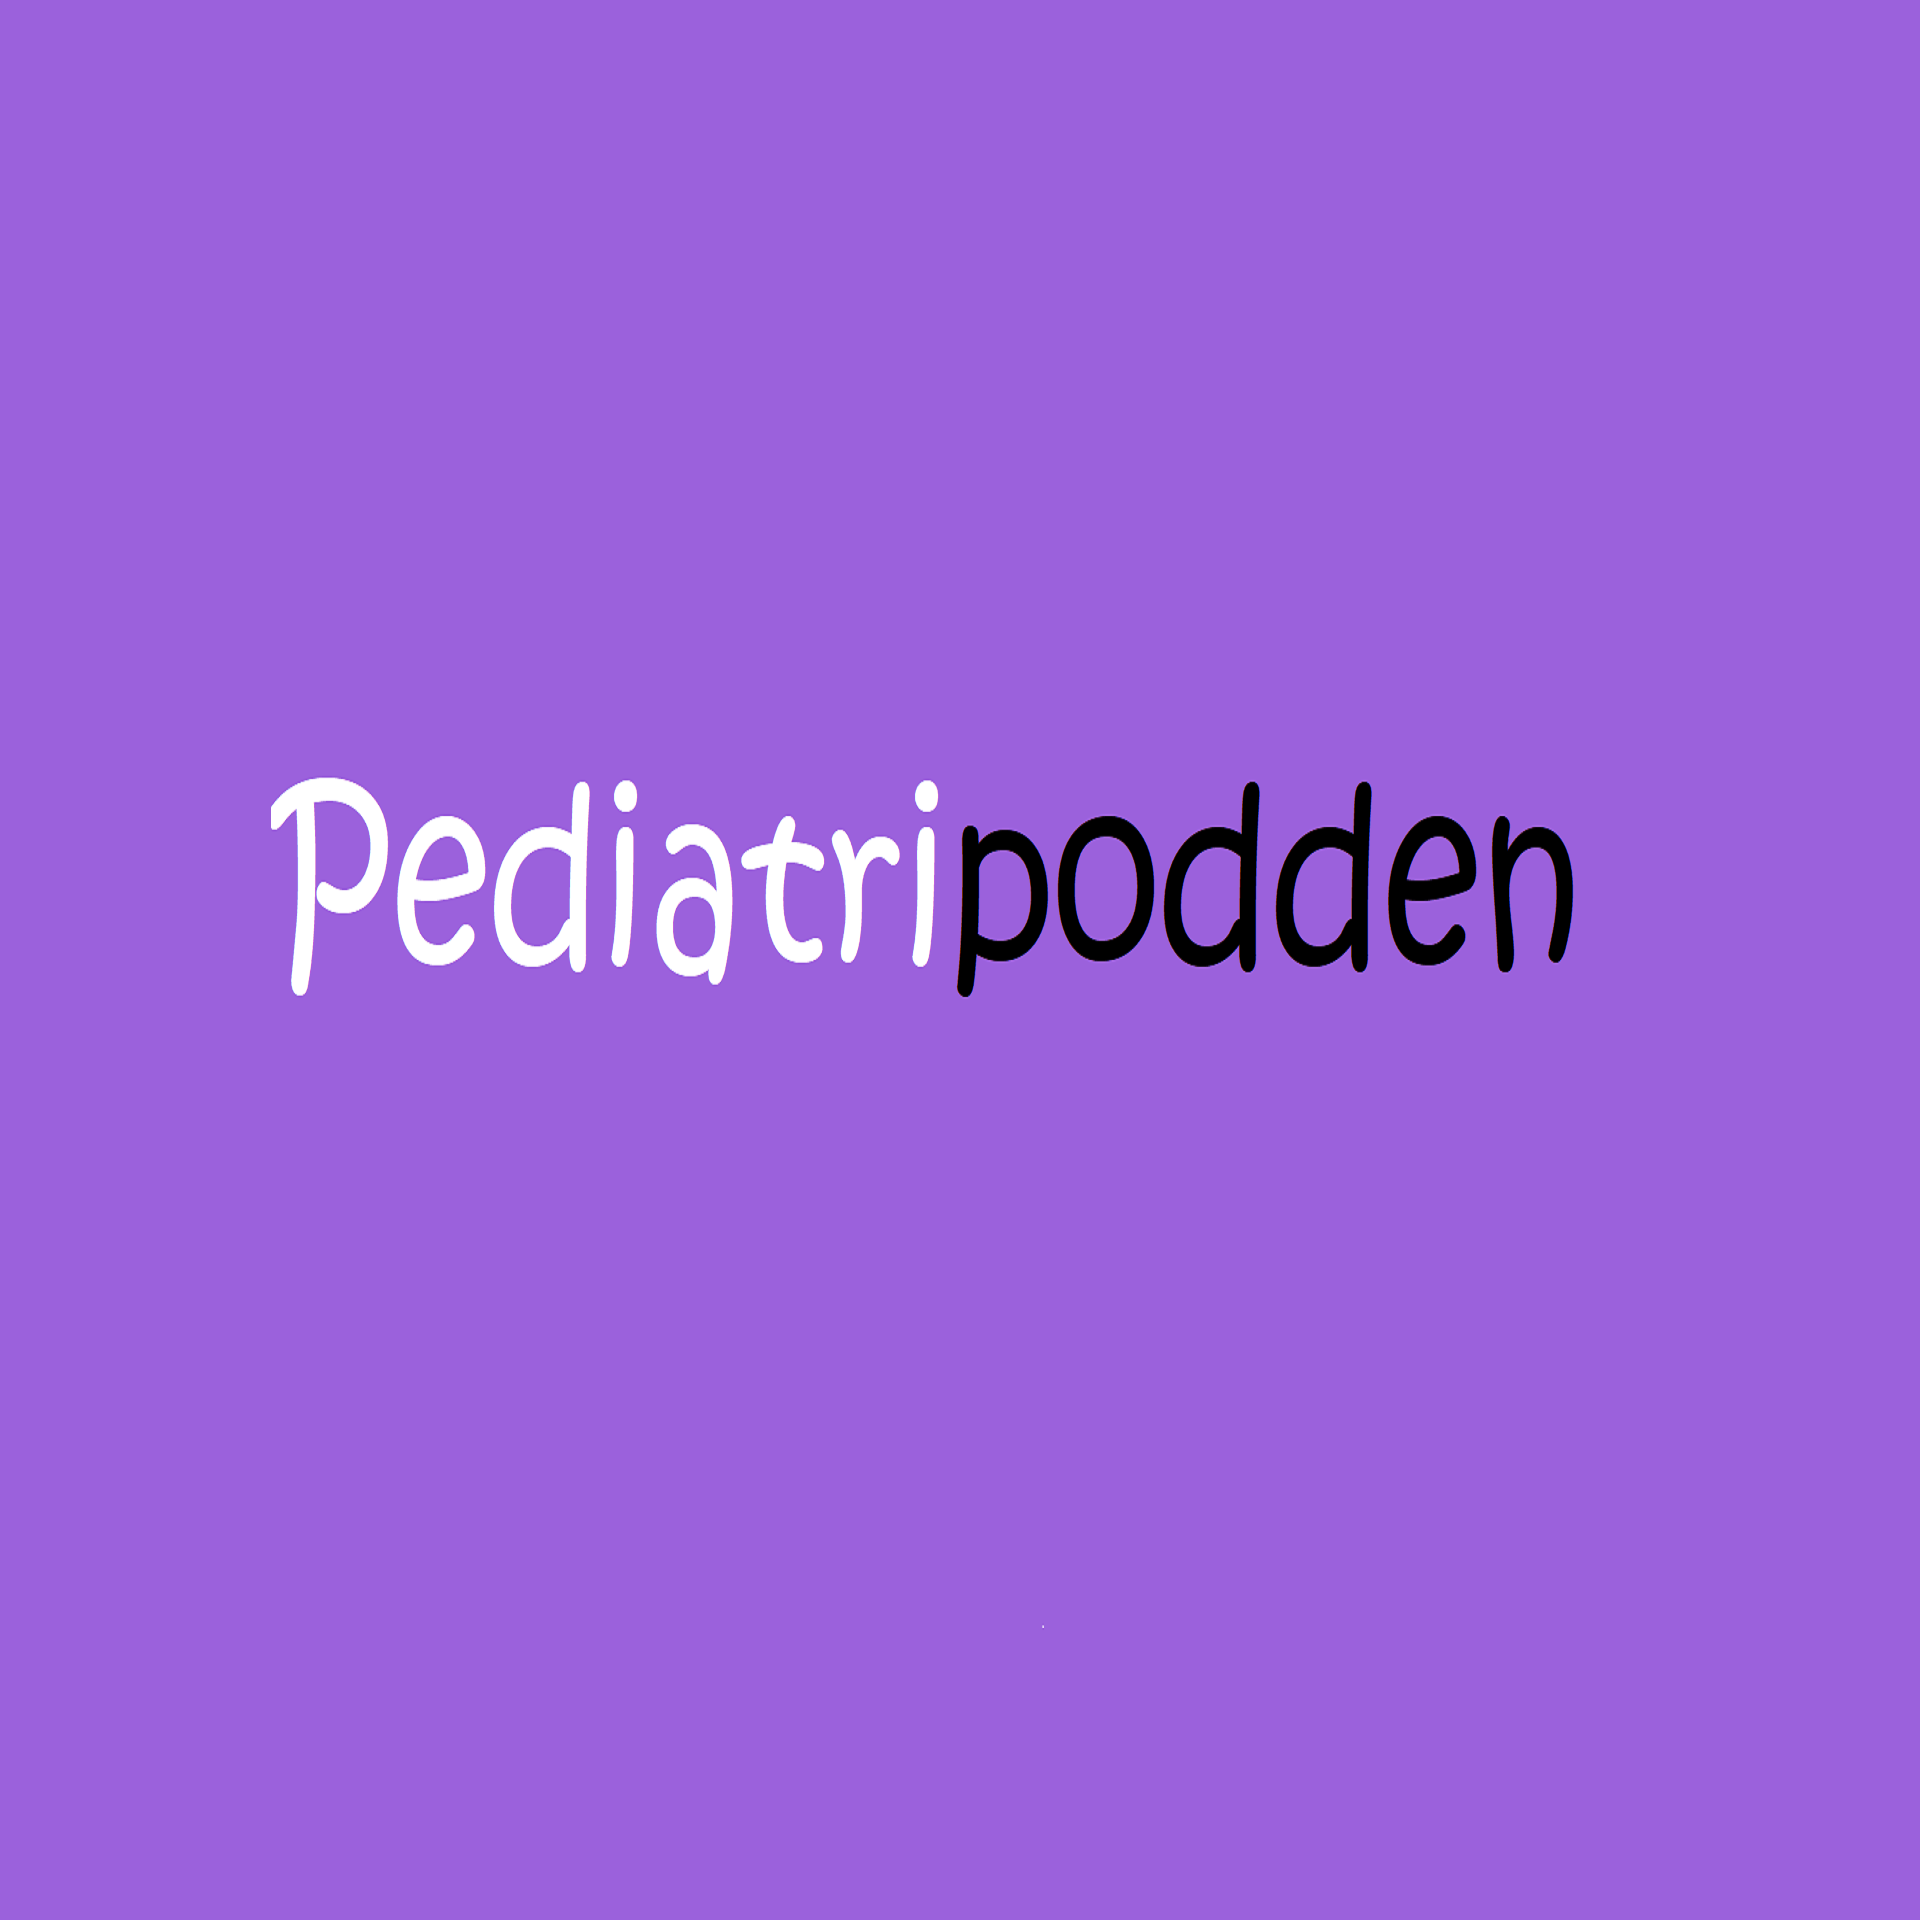 Pediatripodden